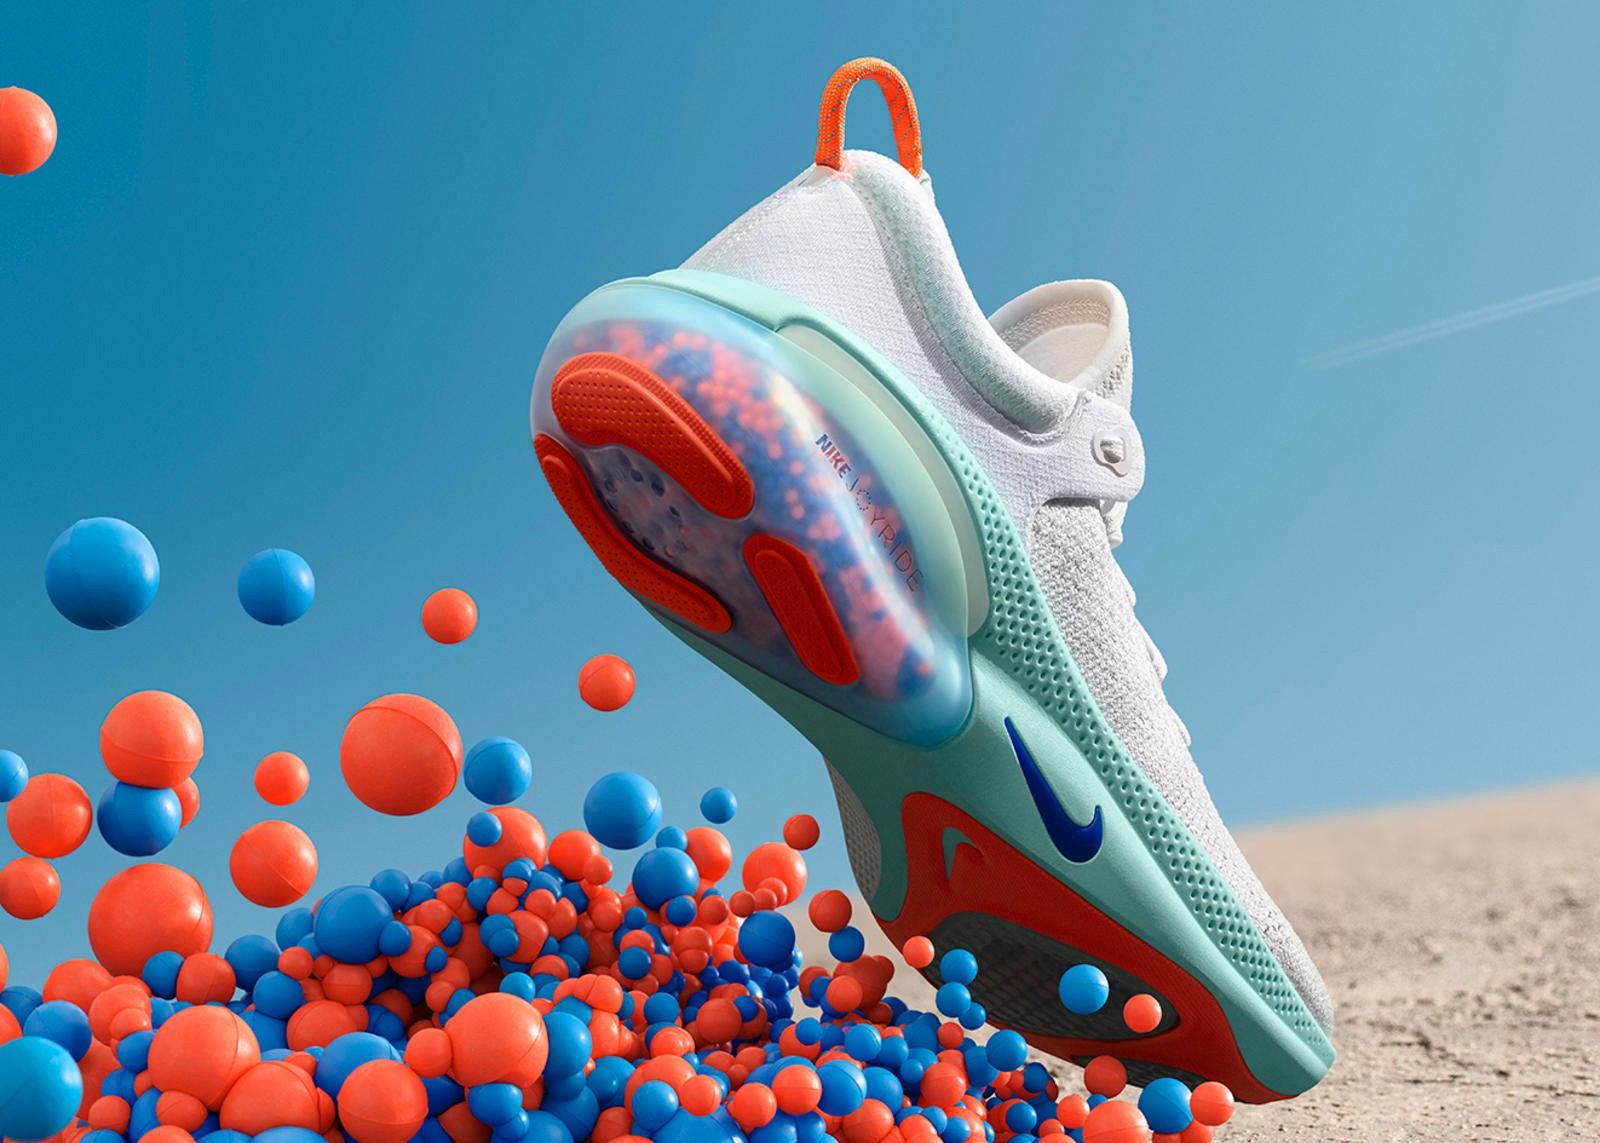 Nike Receives Flack for Plastic Pollution After Joyride Revealed 